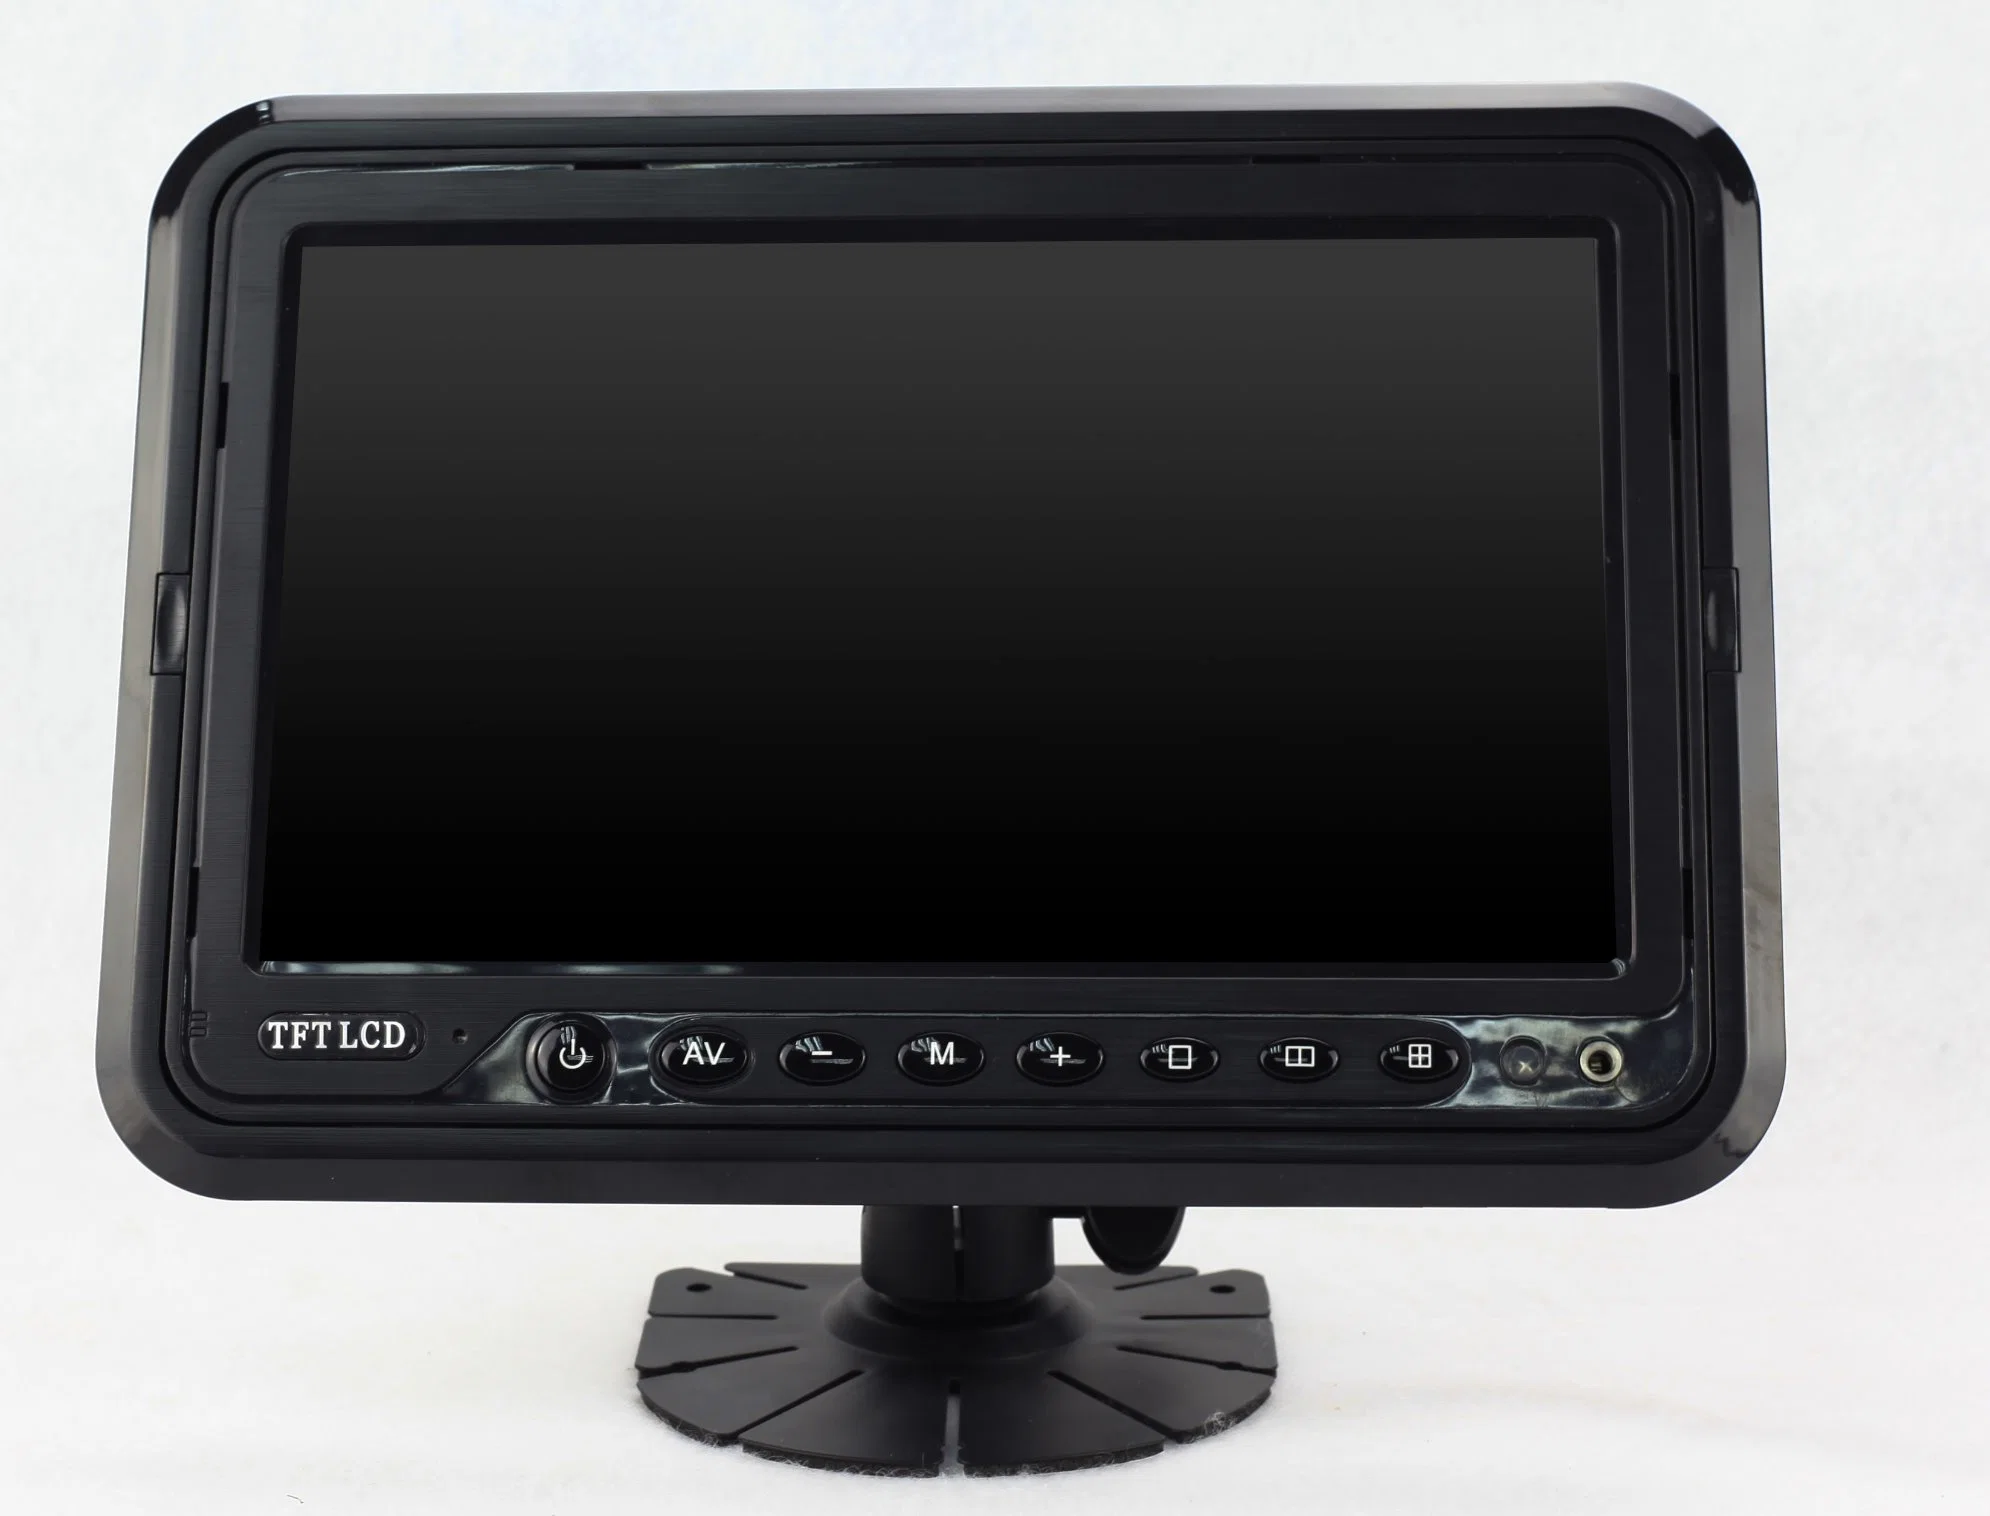 7/9/10,1 pulgadas Ahd Quad Alquiler de panel táctil LCD monitor HDMI DVR